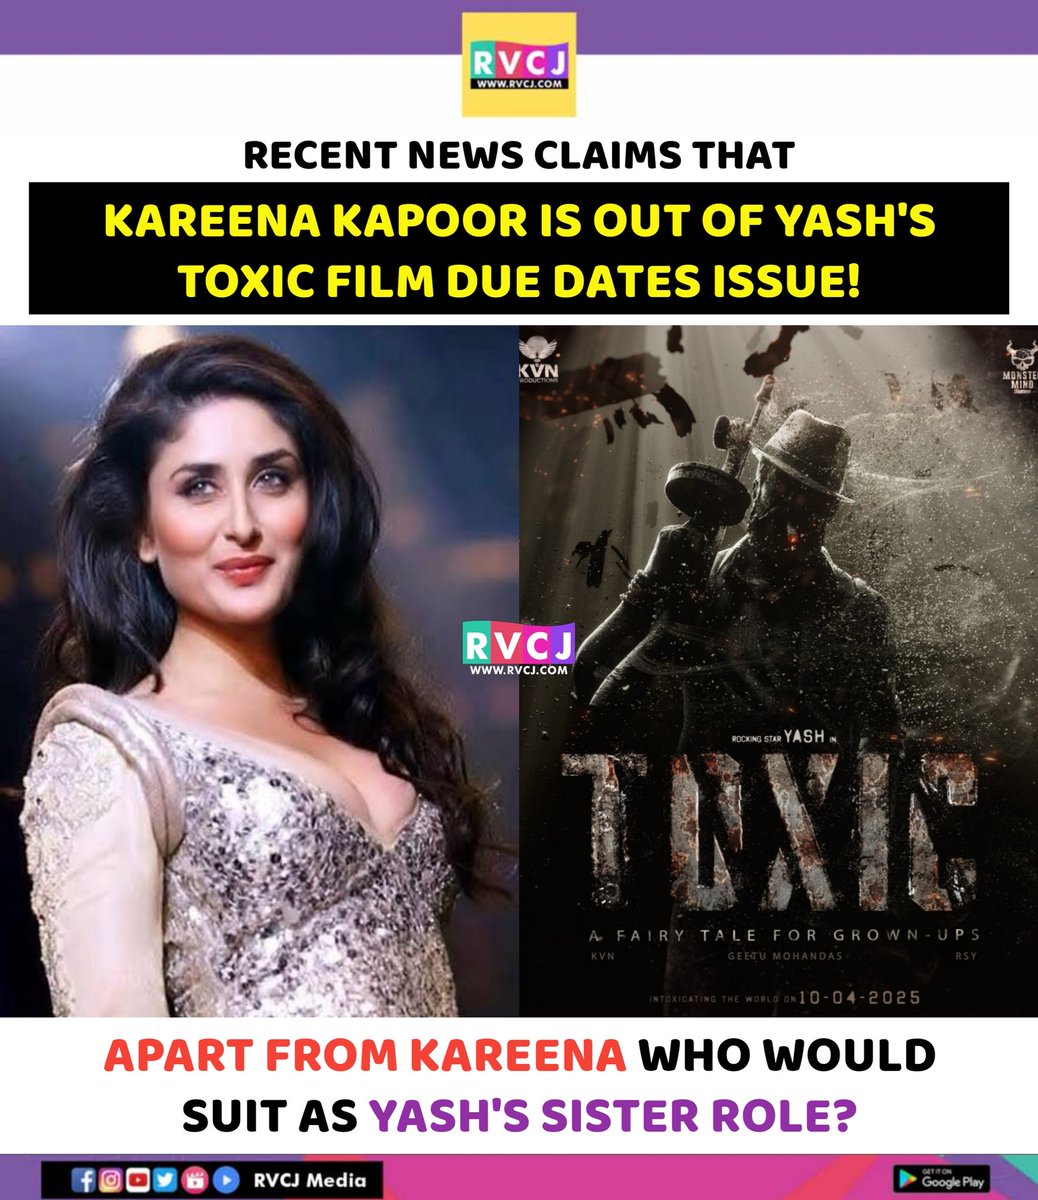 Comment Below 👇 #KareenaKapoor #Yash #ToxicTheMovie #GeethuMohanDas #ToxicMovie #KVNProductions #Kannada #RvcjKannada